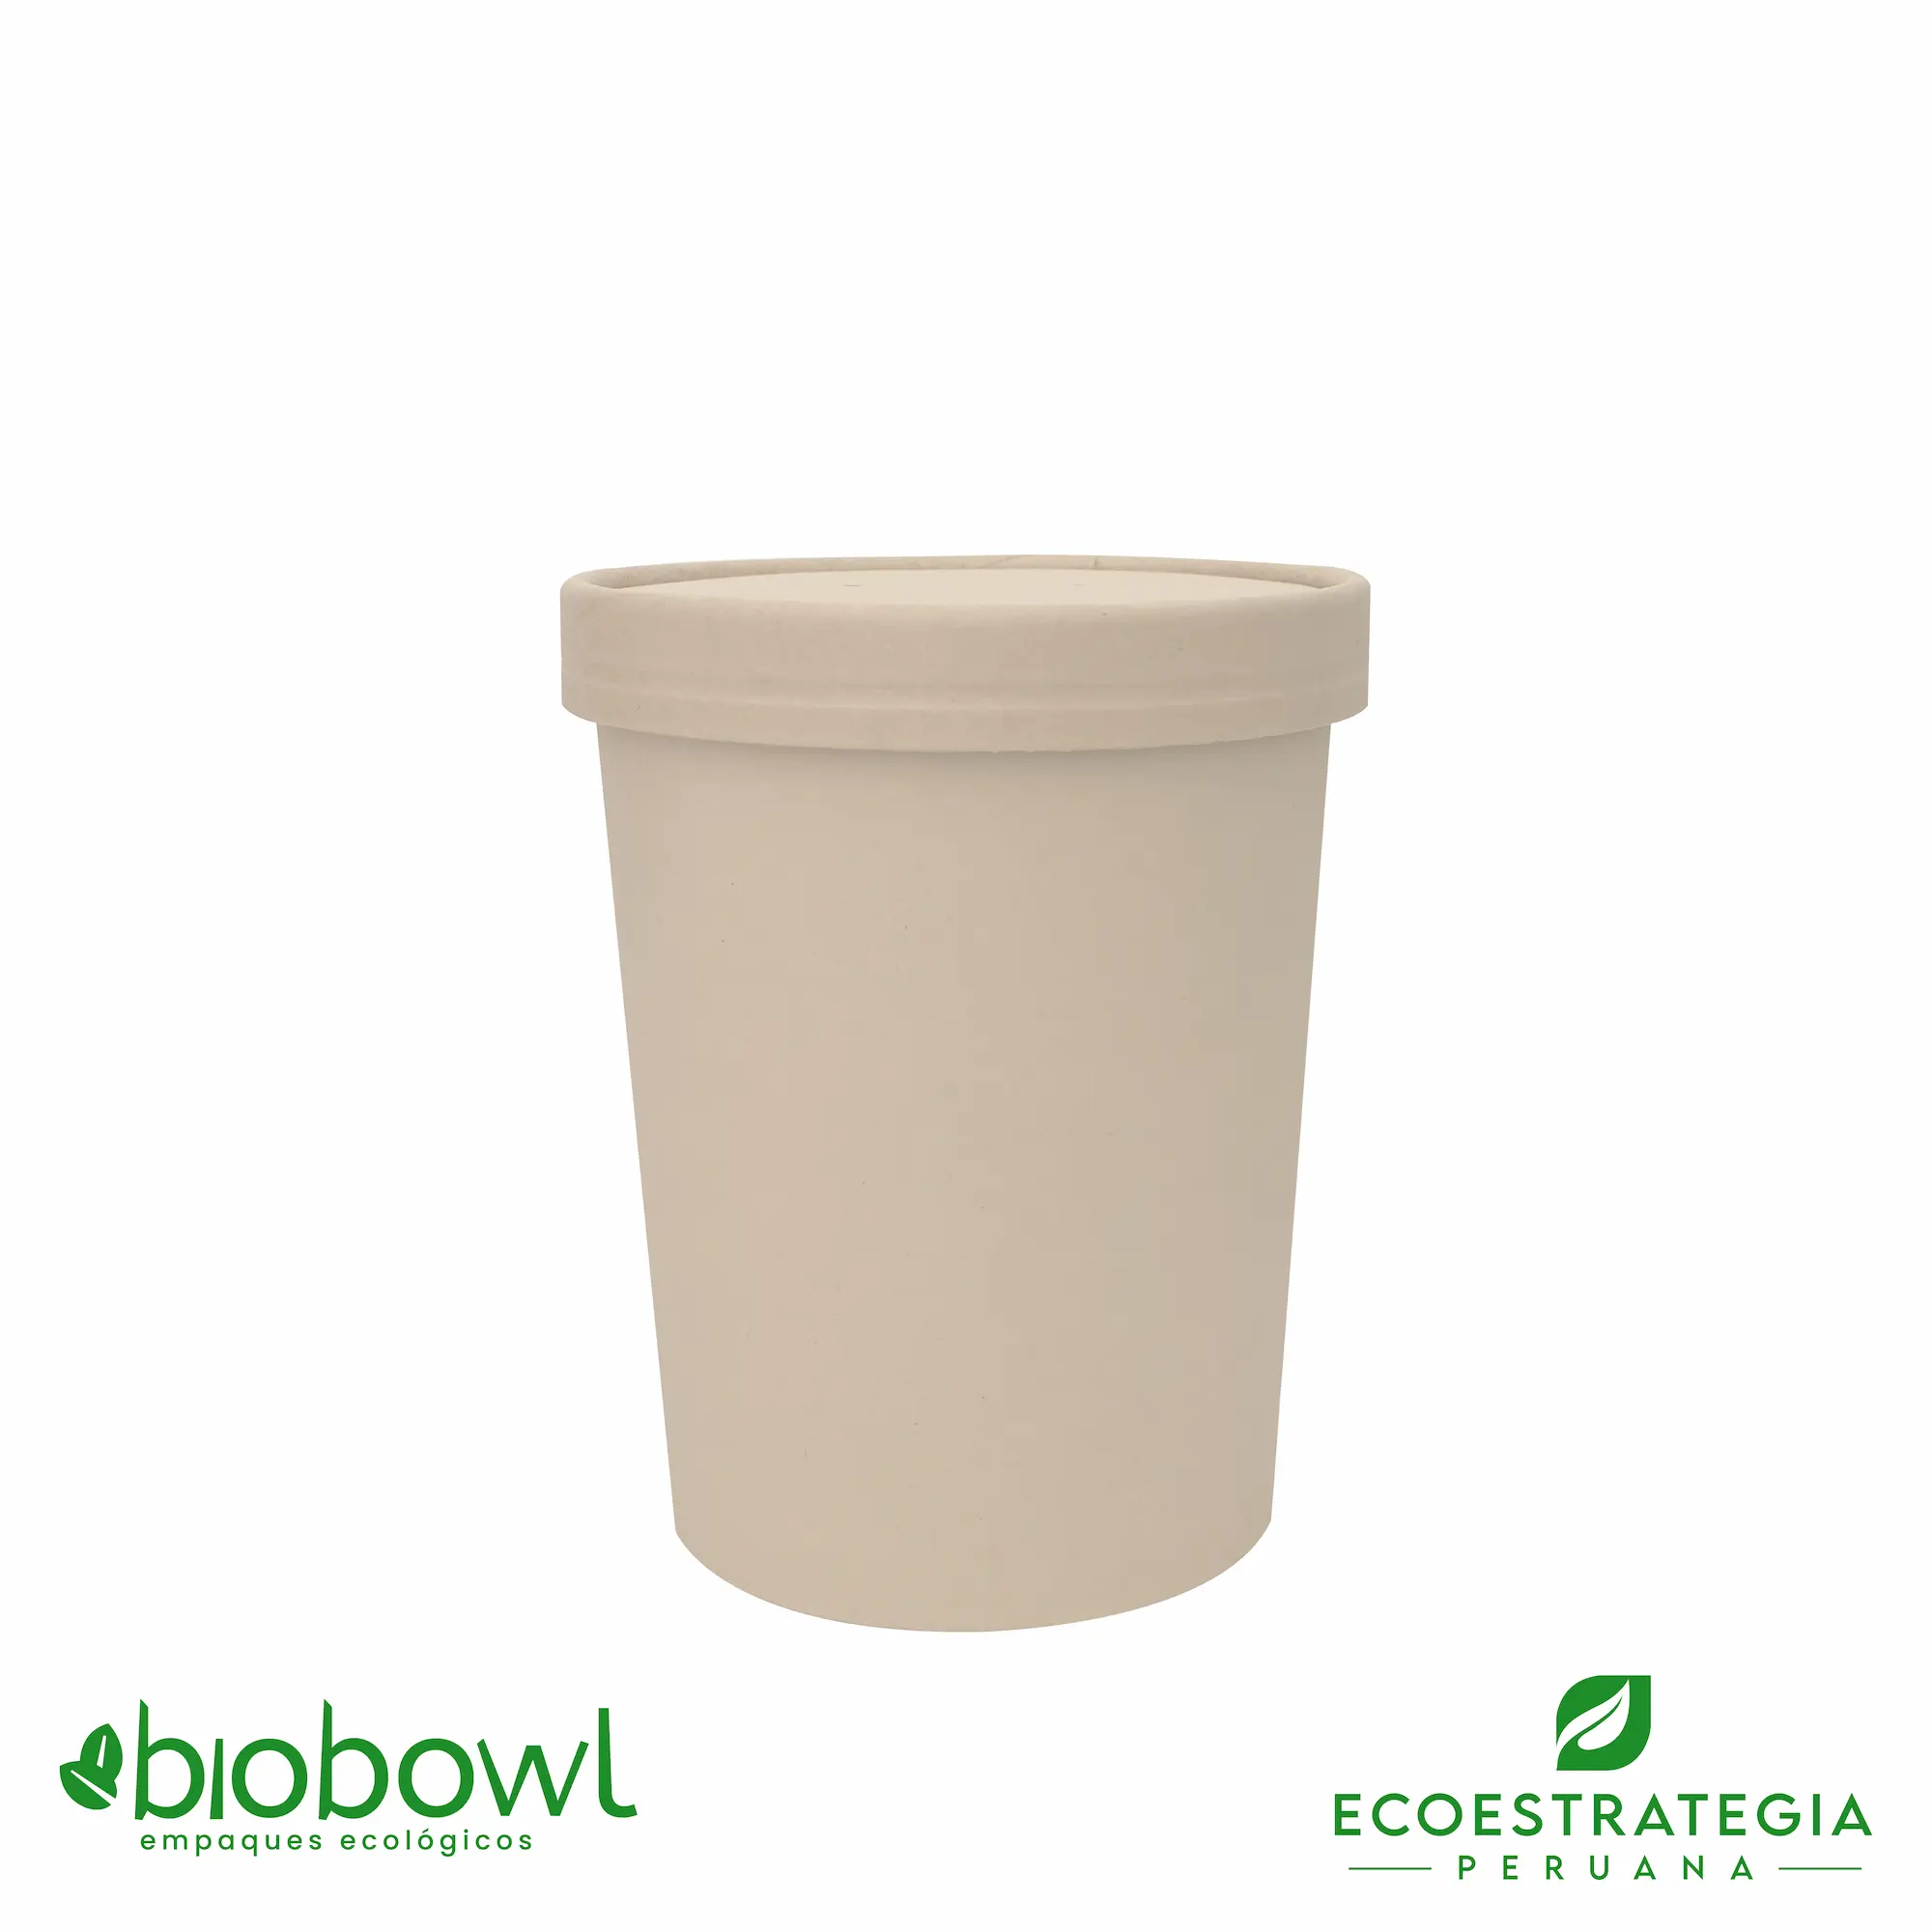 El bowl bambú sopero EP-S16  es conocido también como Sopero bambú 16oz, sopero biodegradable 16 oz, sopero kraft 16oz, sopero pamolsa 16 oz, sopero biodegradable, soperos kraft con tapa, bowl kraft 16 oz con tapa, soup cup 16 oz + tapa bambú, bowl bambú 16 oz, bowl helado 16 oz, bowl de 16 onzas de kraft, bowl de 16 oz de bambú, envase biodegradable de 16 oz, envase 16 oz con tapa, contenedores bambú 16 oz, contenedores kraft 16 oz, envase circular 16 oz, bowl celulosa de bambú 16 oz, bowl hondo biodegradable 16 oz, envases soperos con tapa 16 oz, envase circular 16 oz bioform kraft, sopero fibra de bambú 16 oz, envase para sopa 16 oz, envase para helado 16 oz, envase barril 16 oz biodegradable, envase bambú 16 oz, importadores de sopero 16 oz bambú, distribuidores de sopero 16 oz bambú, mayorista de sopero 16 oz bambú.